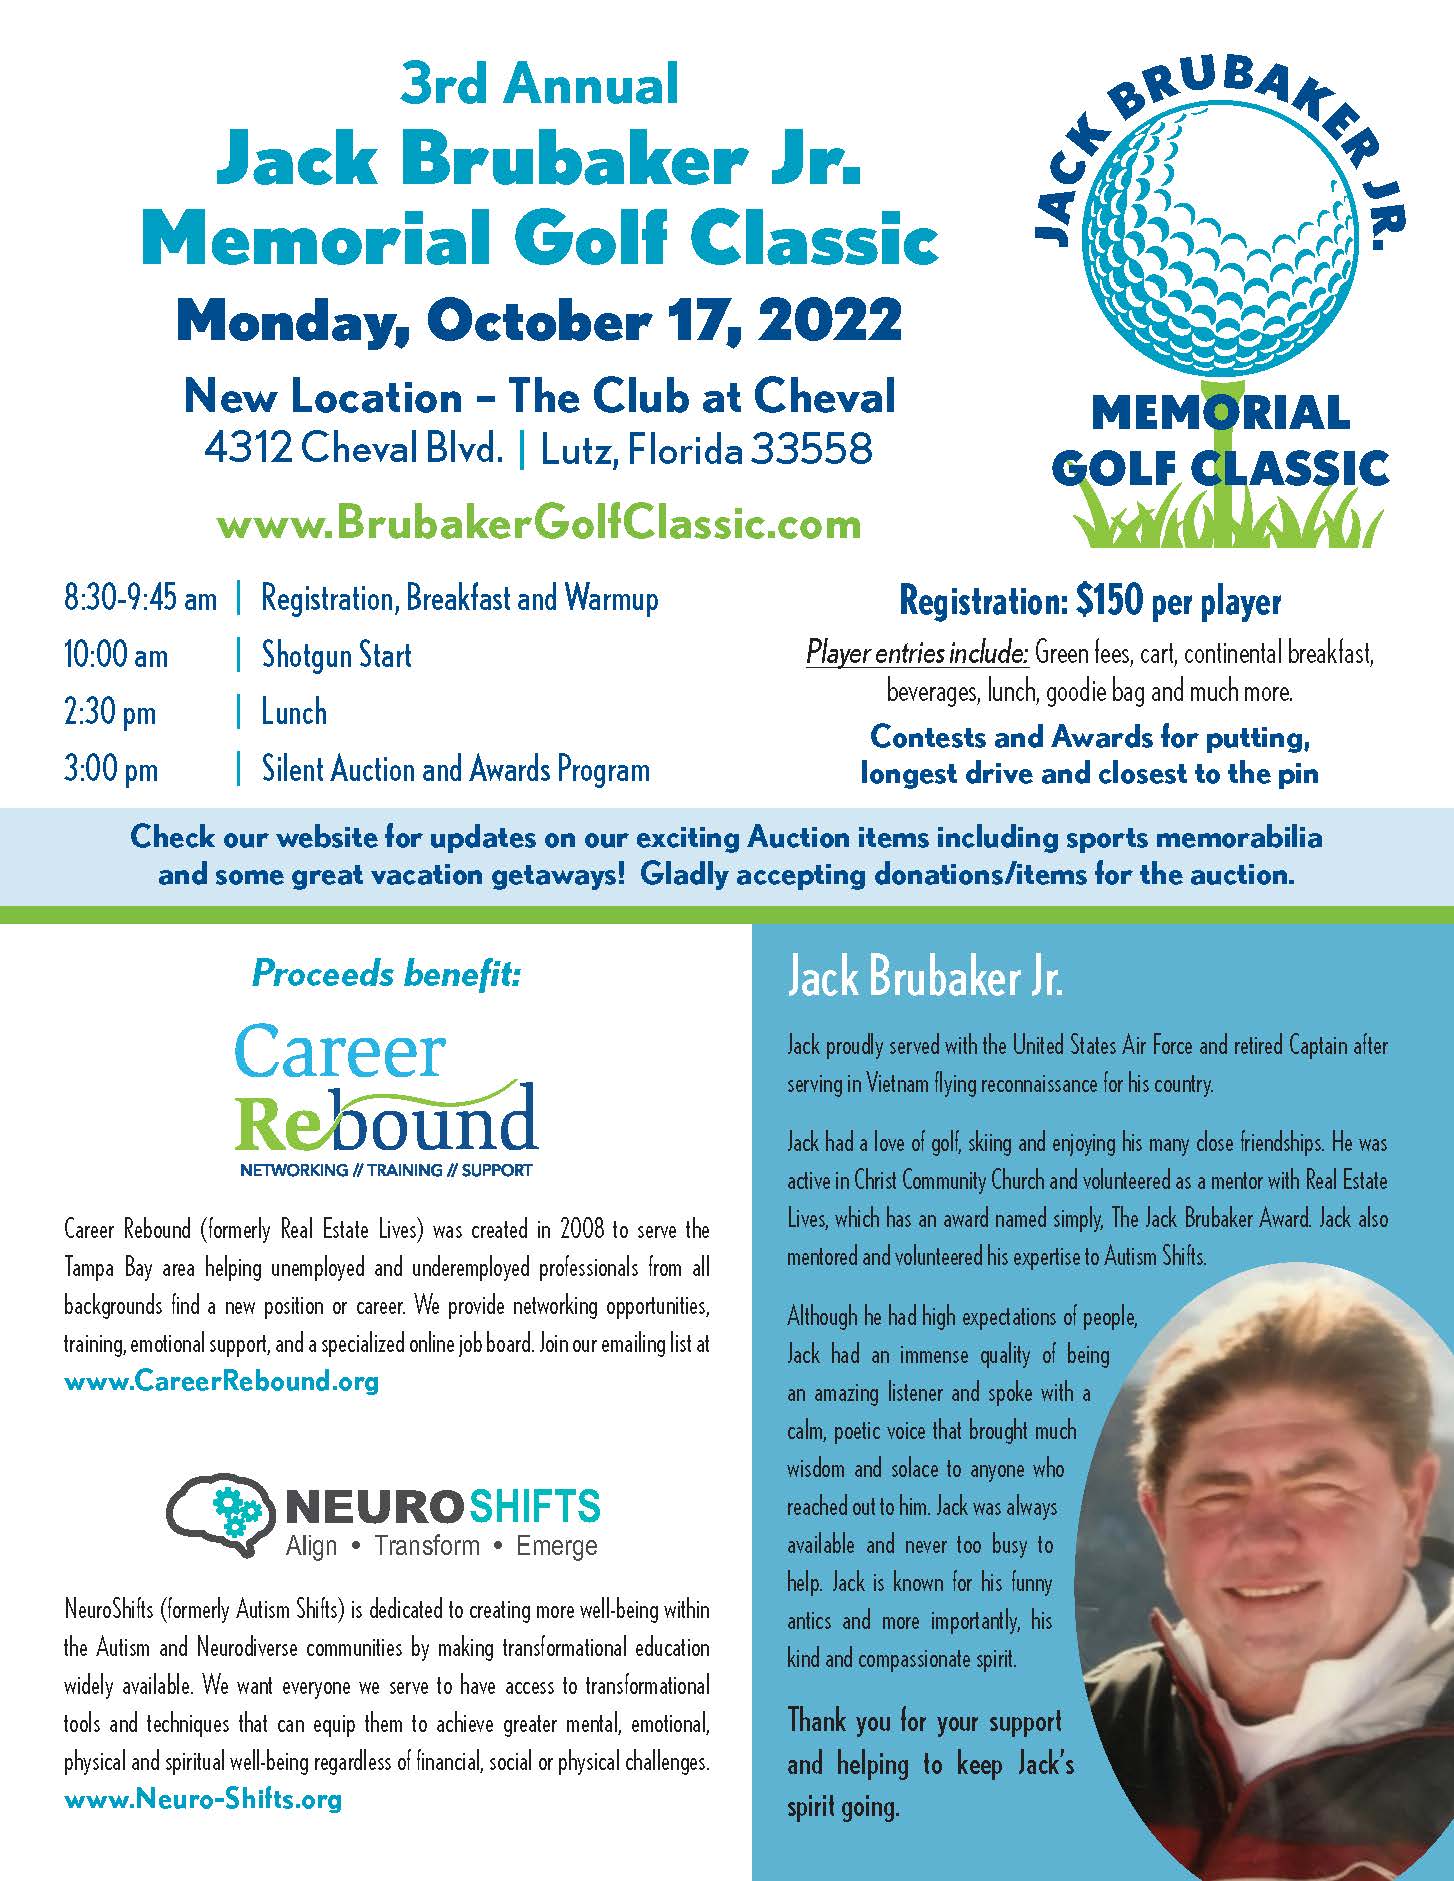 Jack Brubaker, Jr. Memorial Golf Classic Flyer 2022